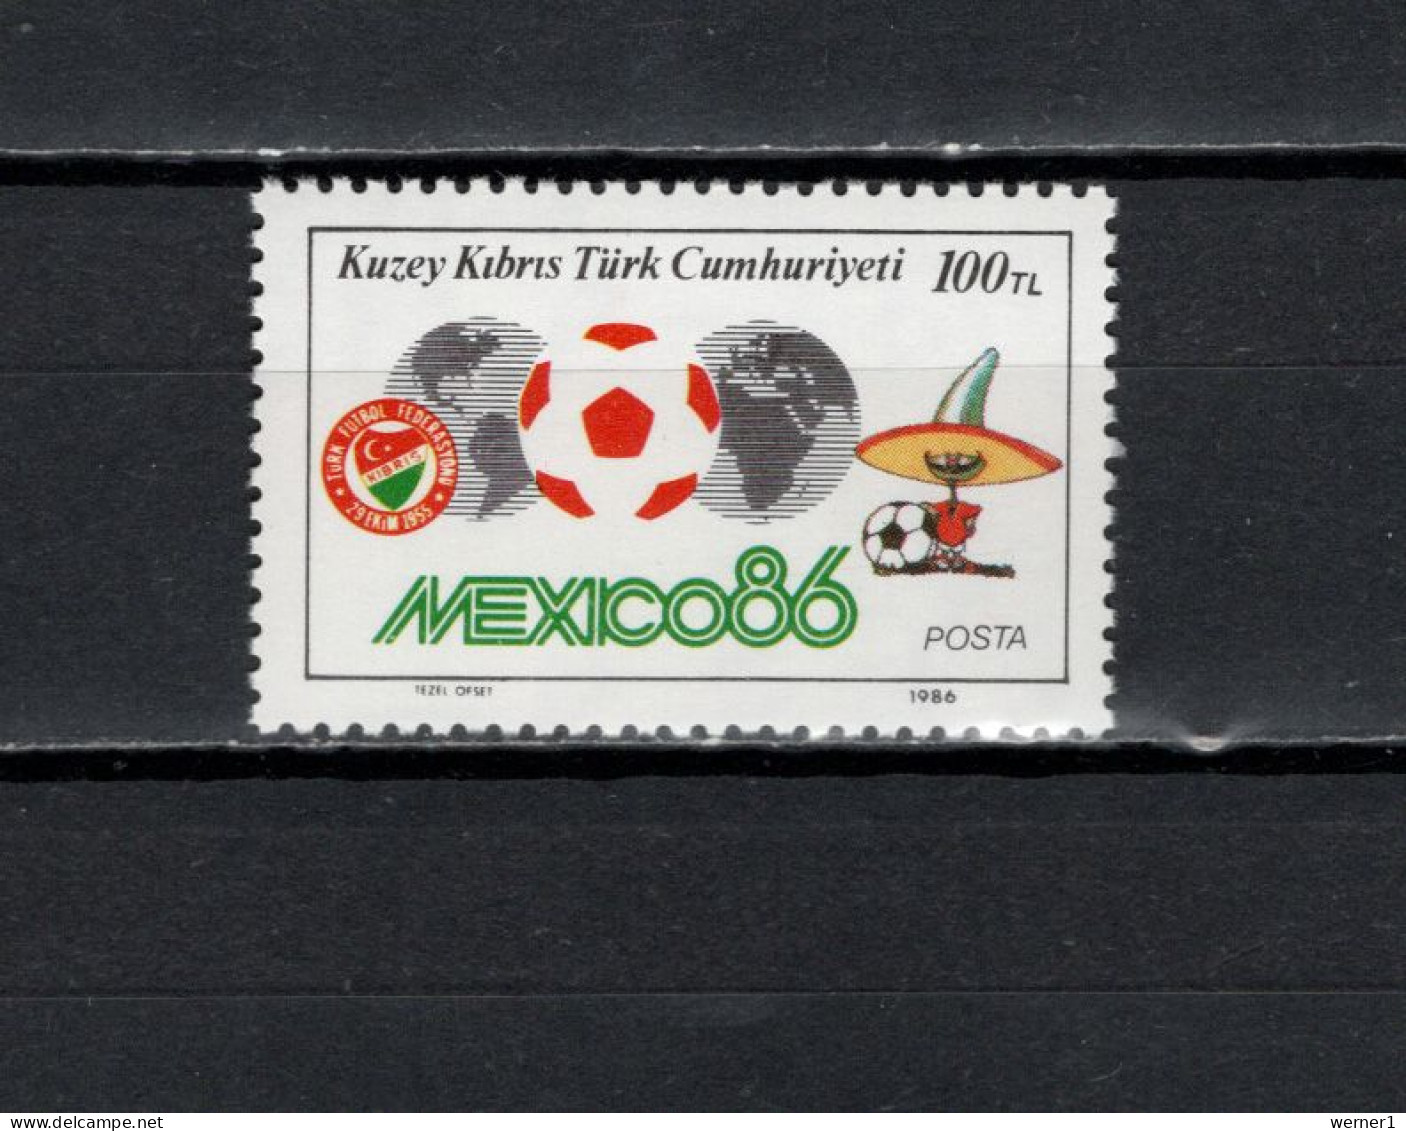 Turkish Cyprus 1986 Football Soccer World Cup Stamp MNH - 1986 – México